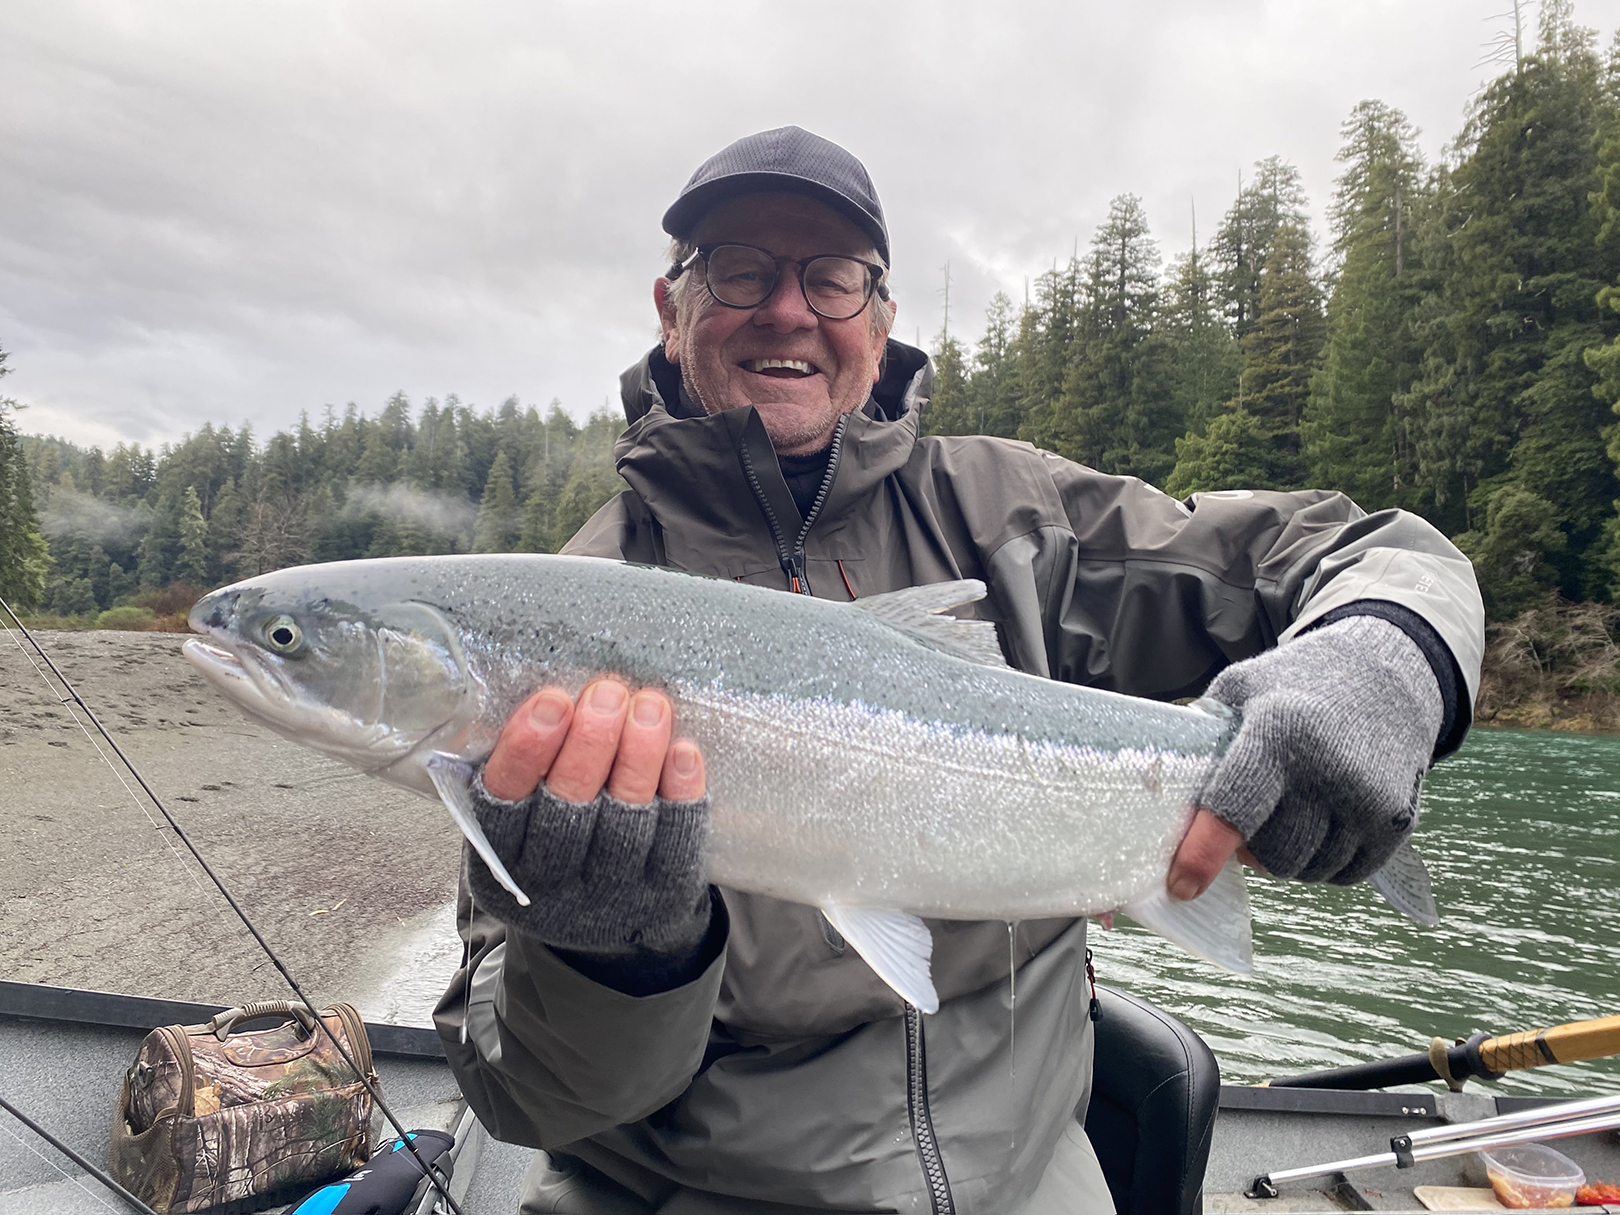 Winter Steelhead Fishing On the Salmon River - On The Water